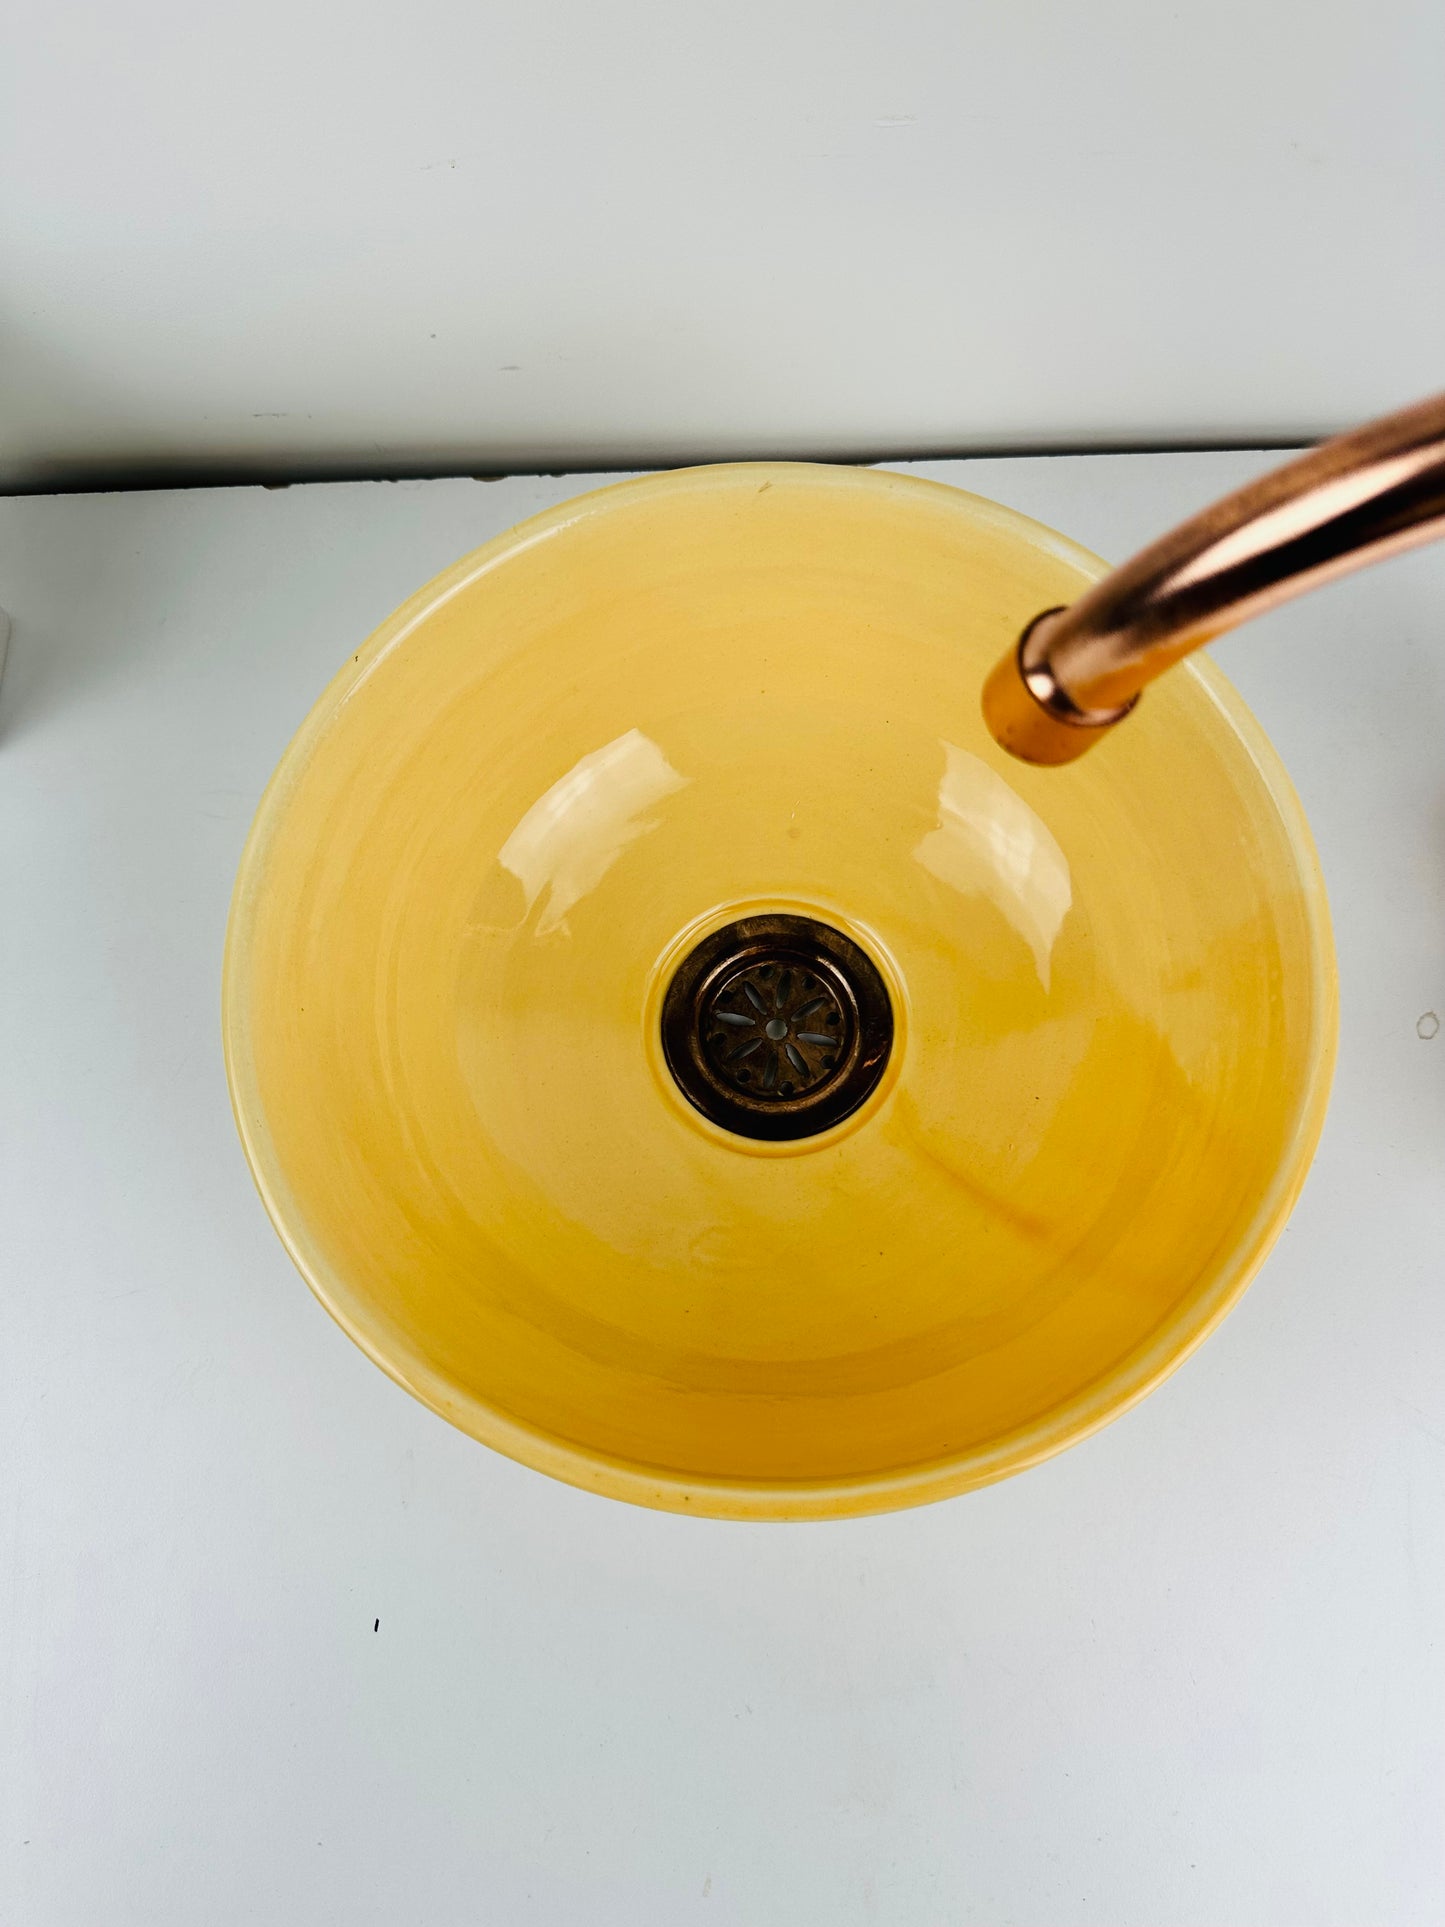 Golden Mustard: Handcrafted Ceramic Sink in Mustard Yellow Hue